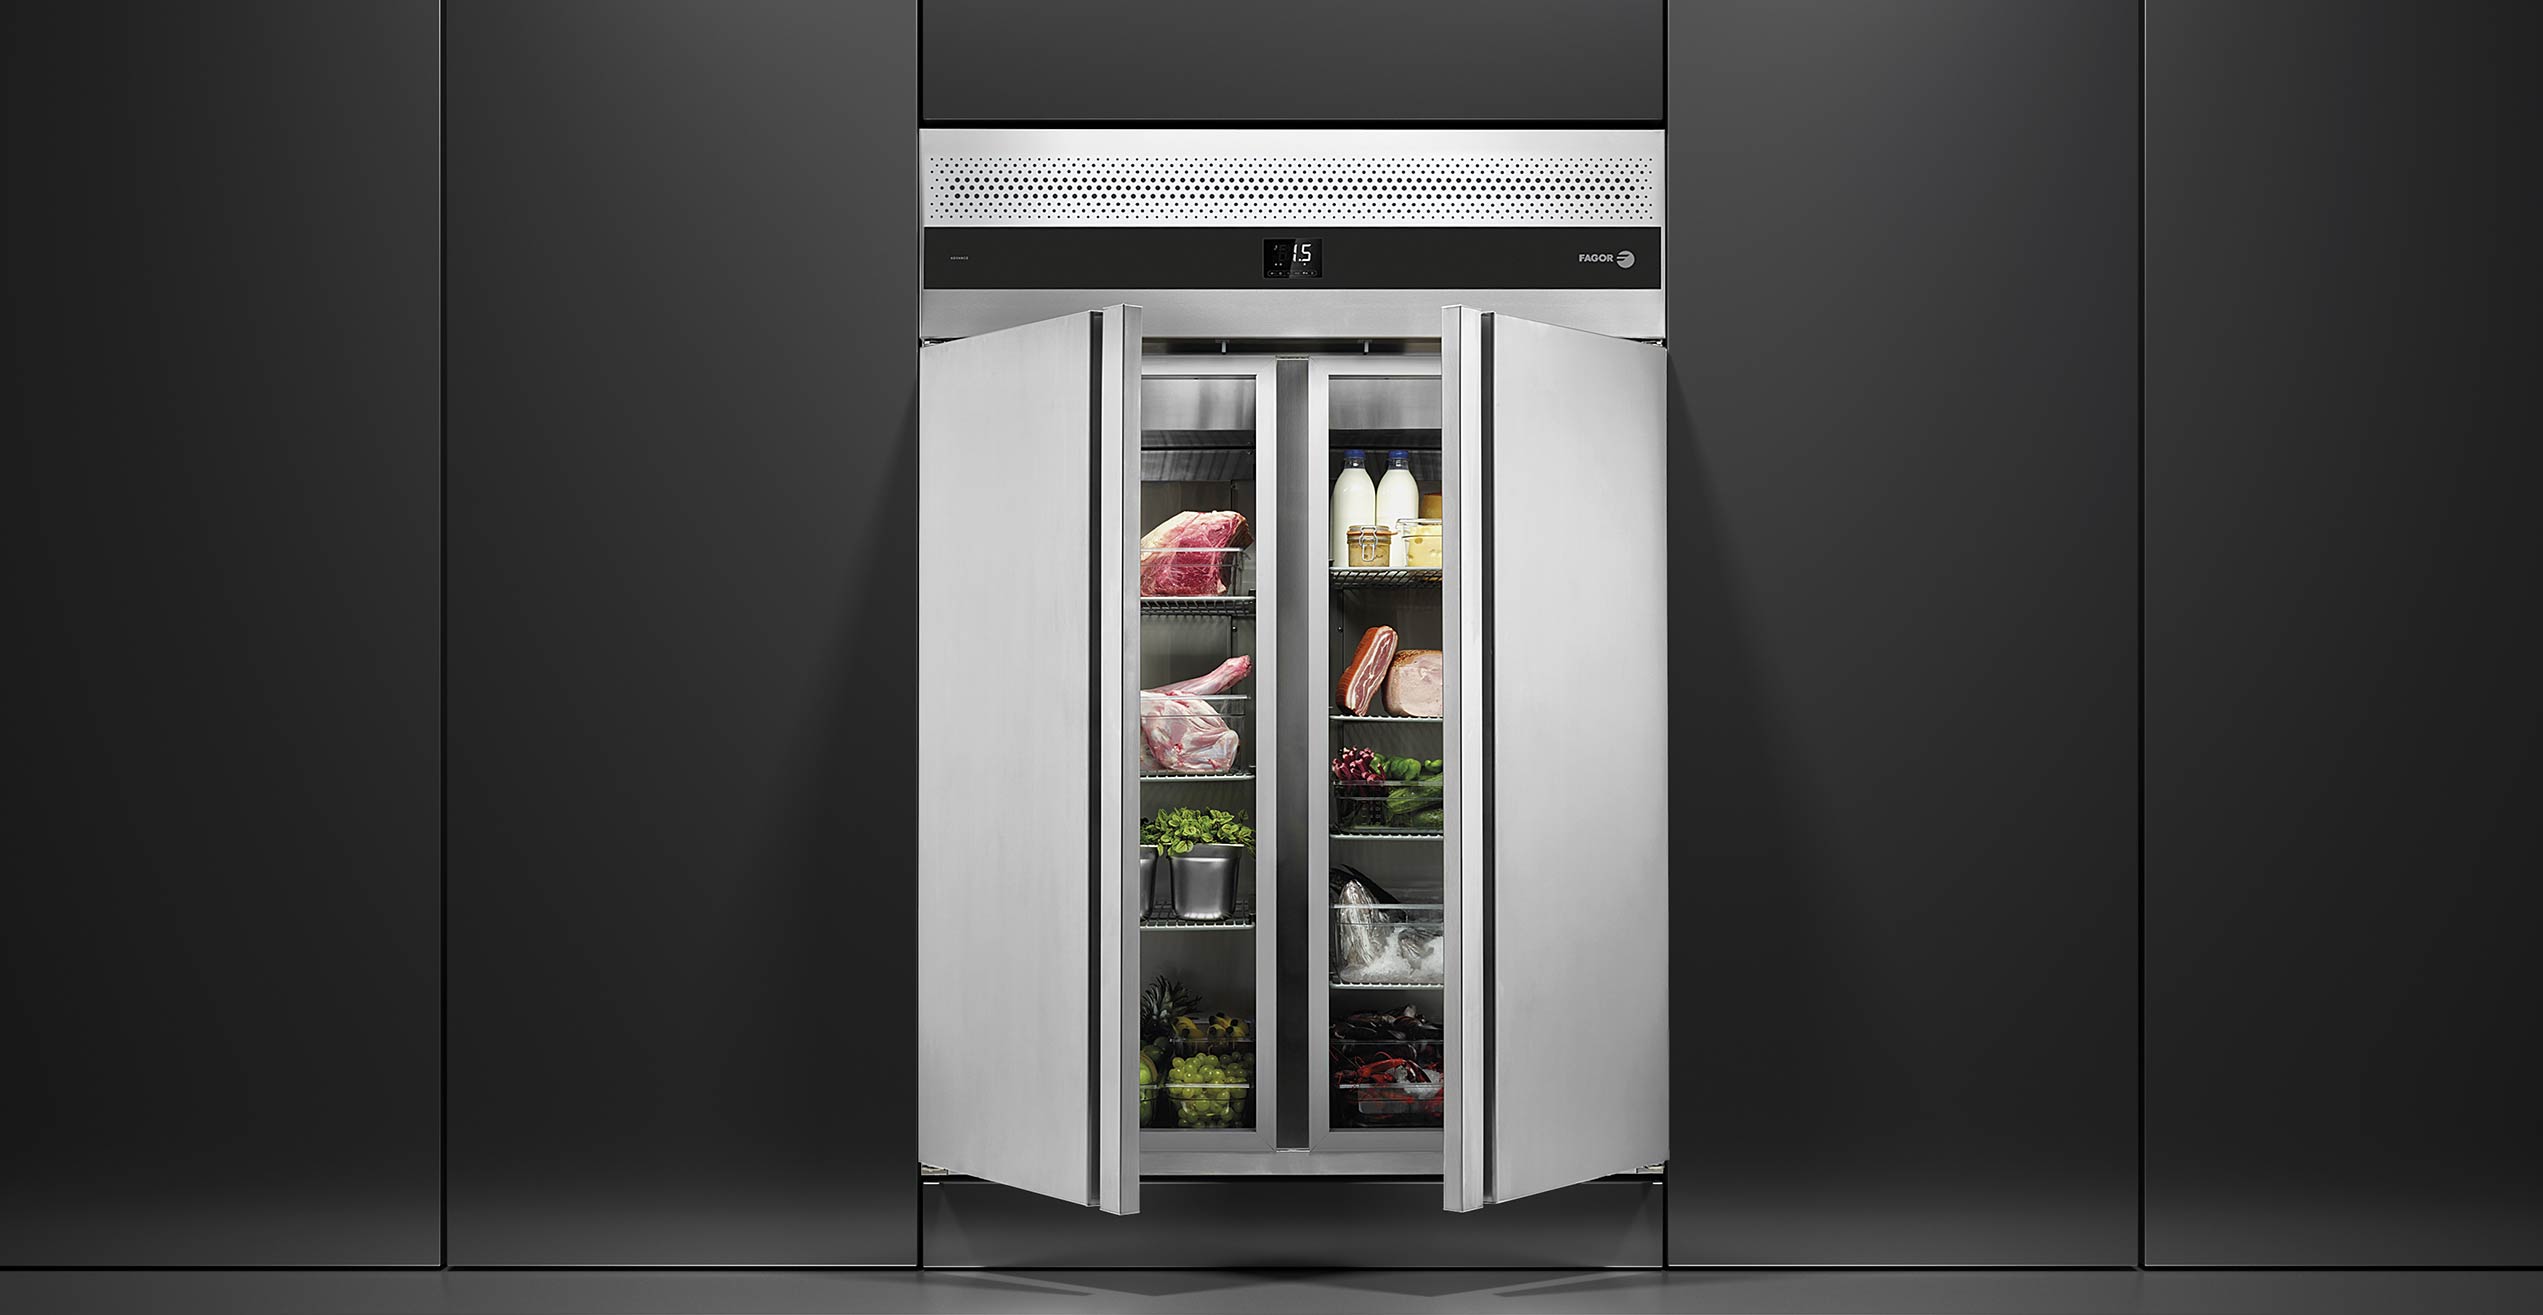 Industrial Refrigerator - Professional Refrigerator